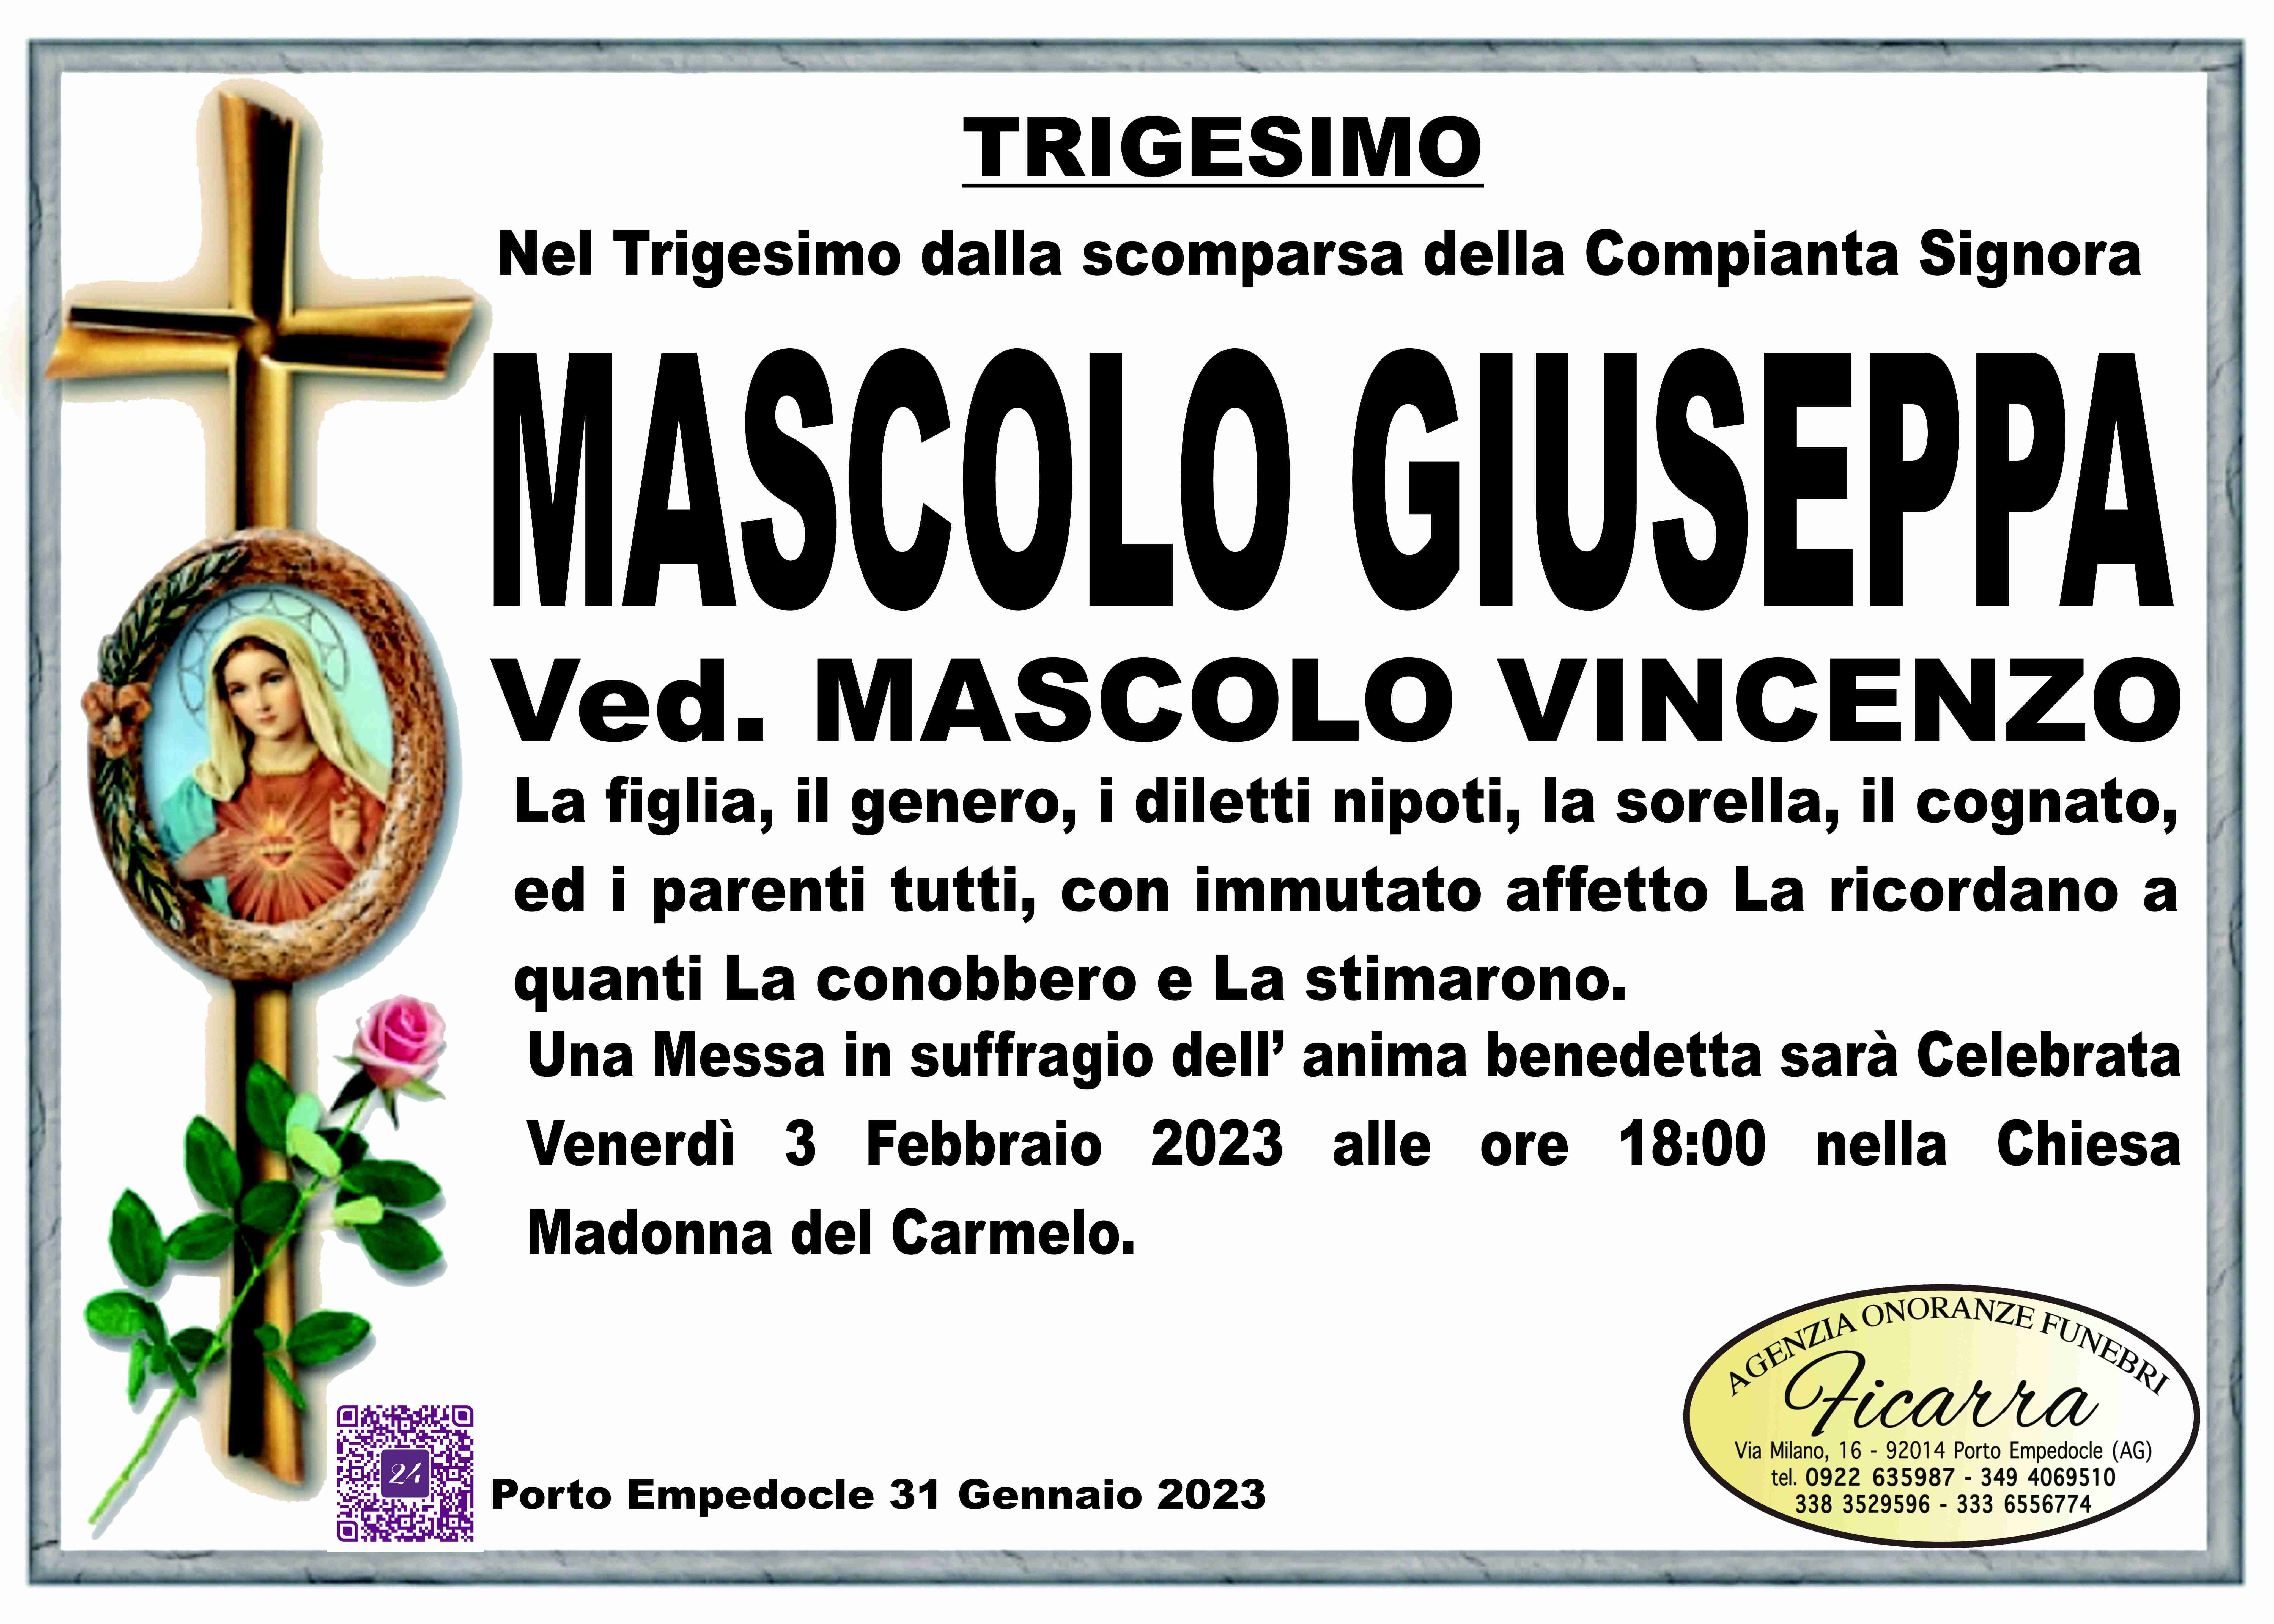 Giuseppa Mascolo